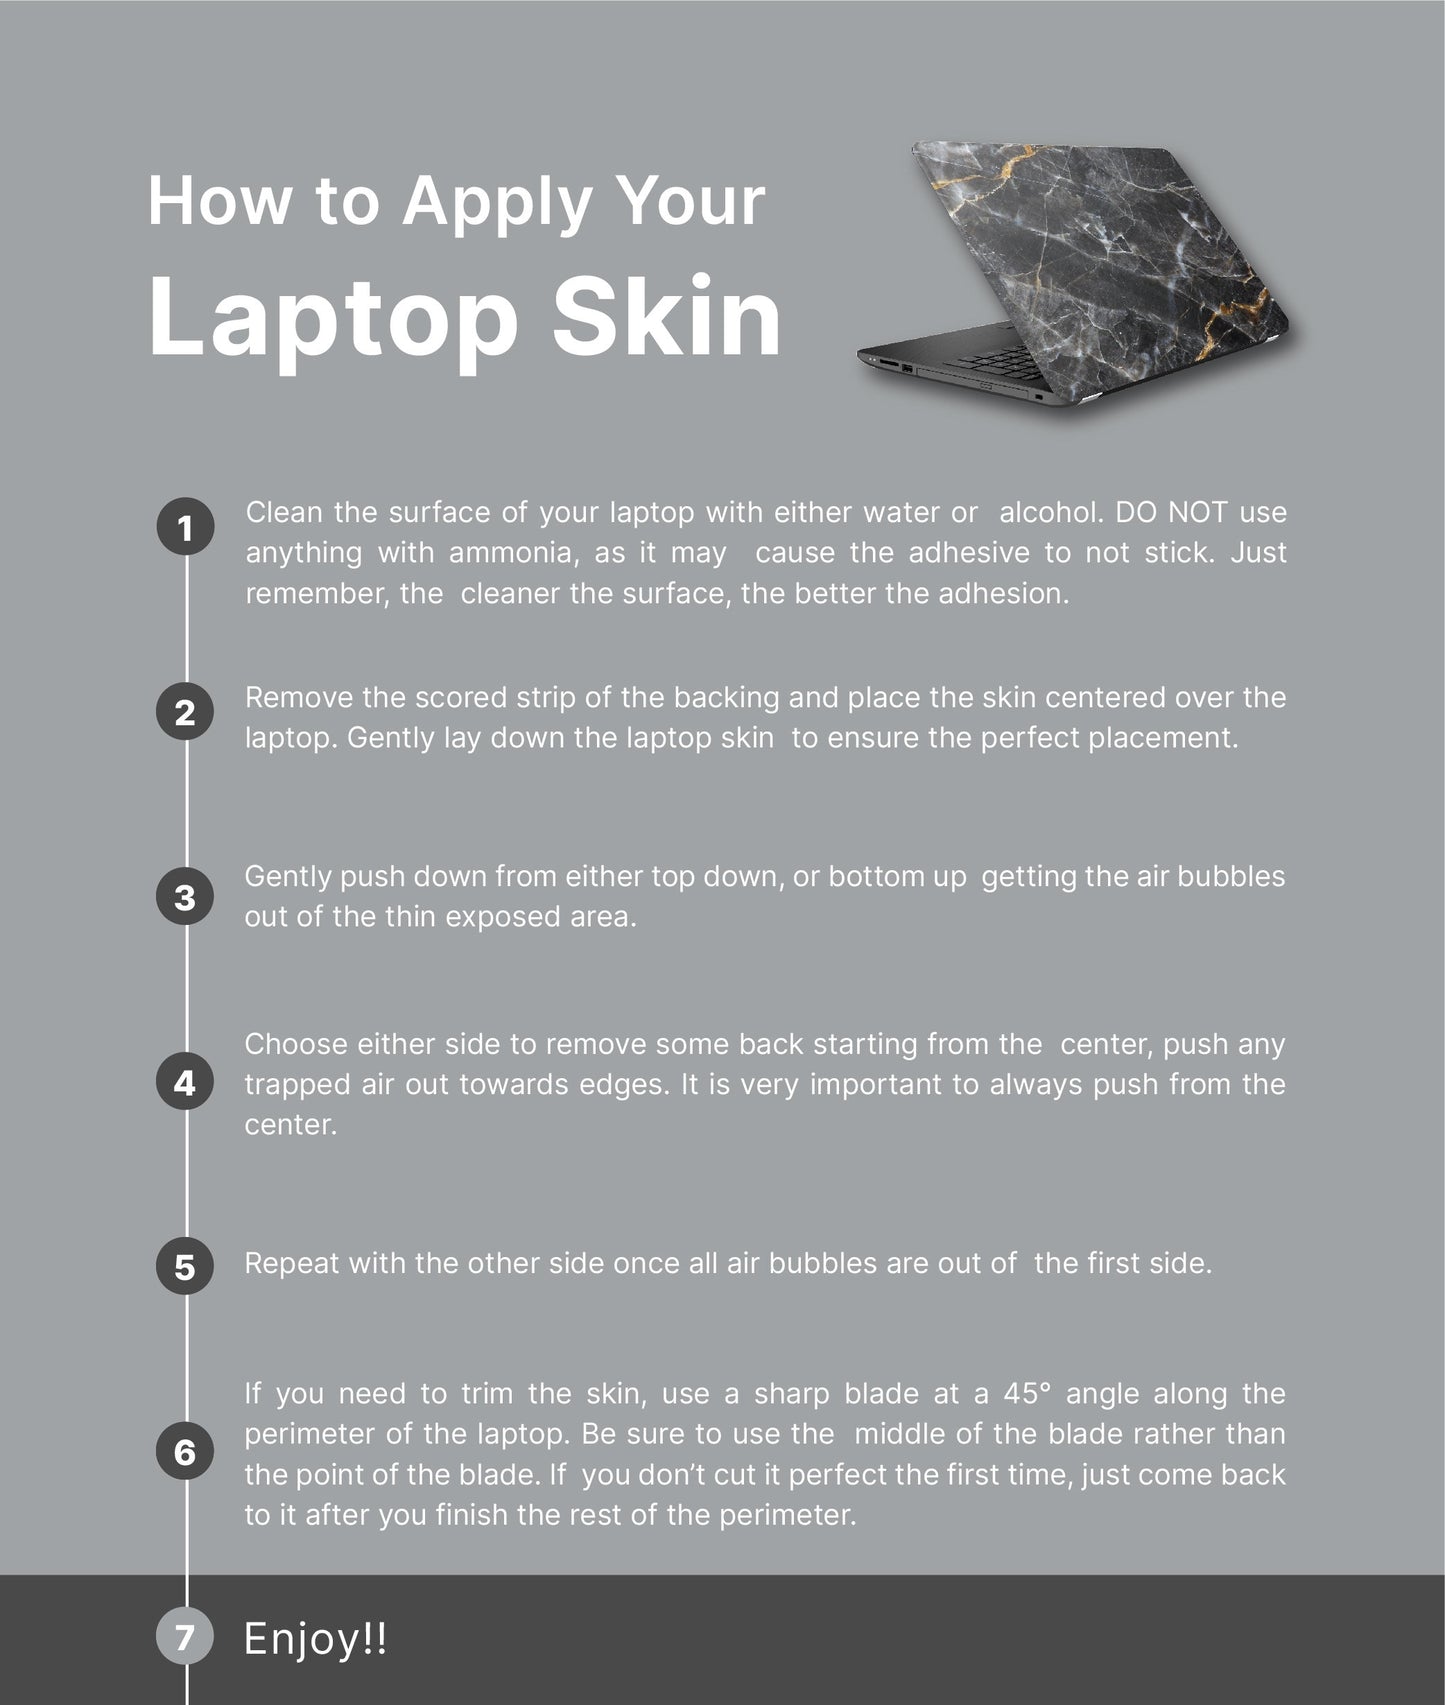 Tropical Floral Laptop Skin, Laptop Cover, Laptop Skins, Removable Laptop Skins, Laptop Decal, Customized Laptop Skin, Laptop Stickers 154